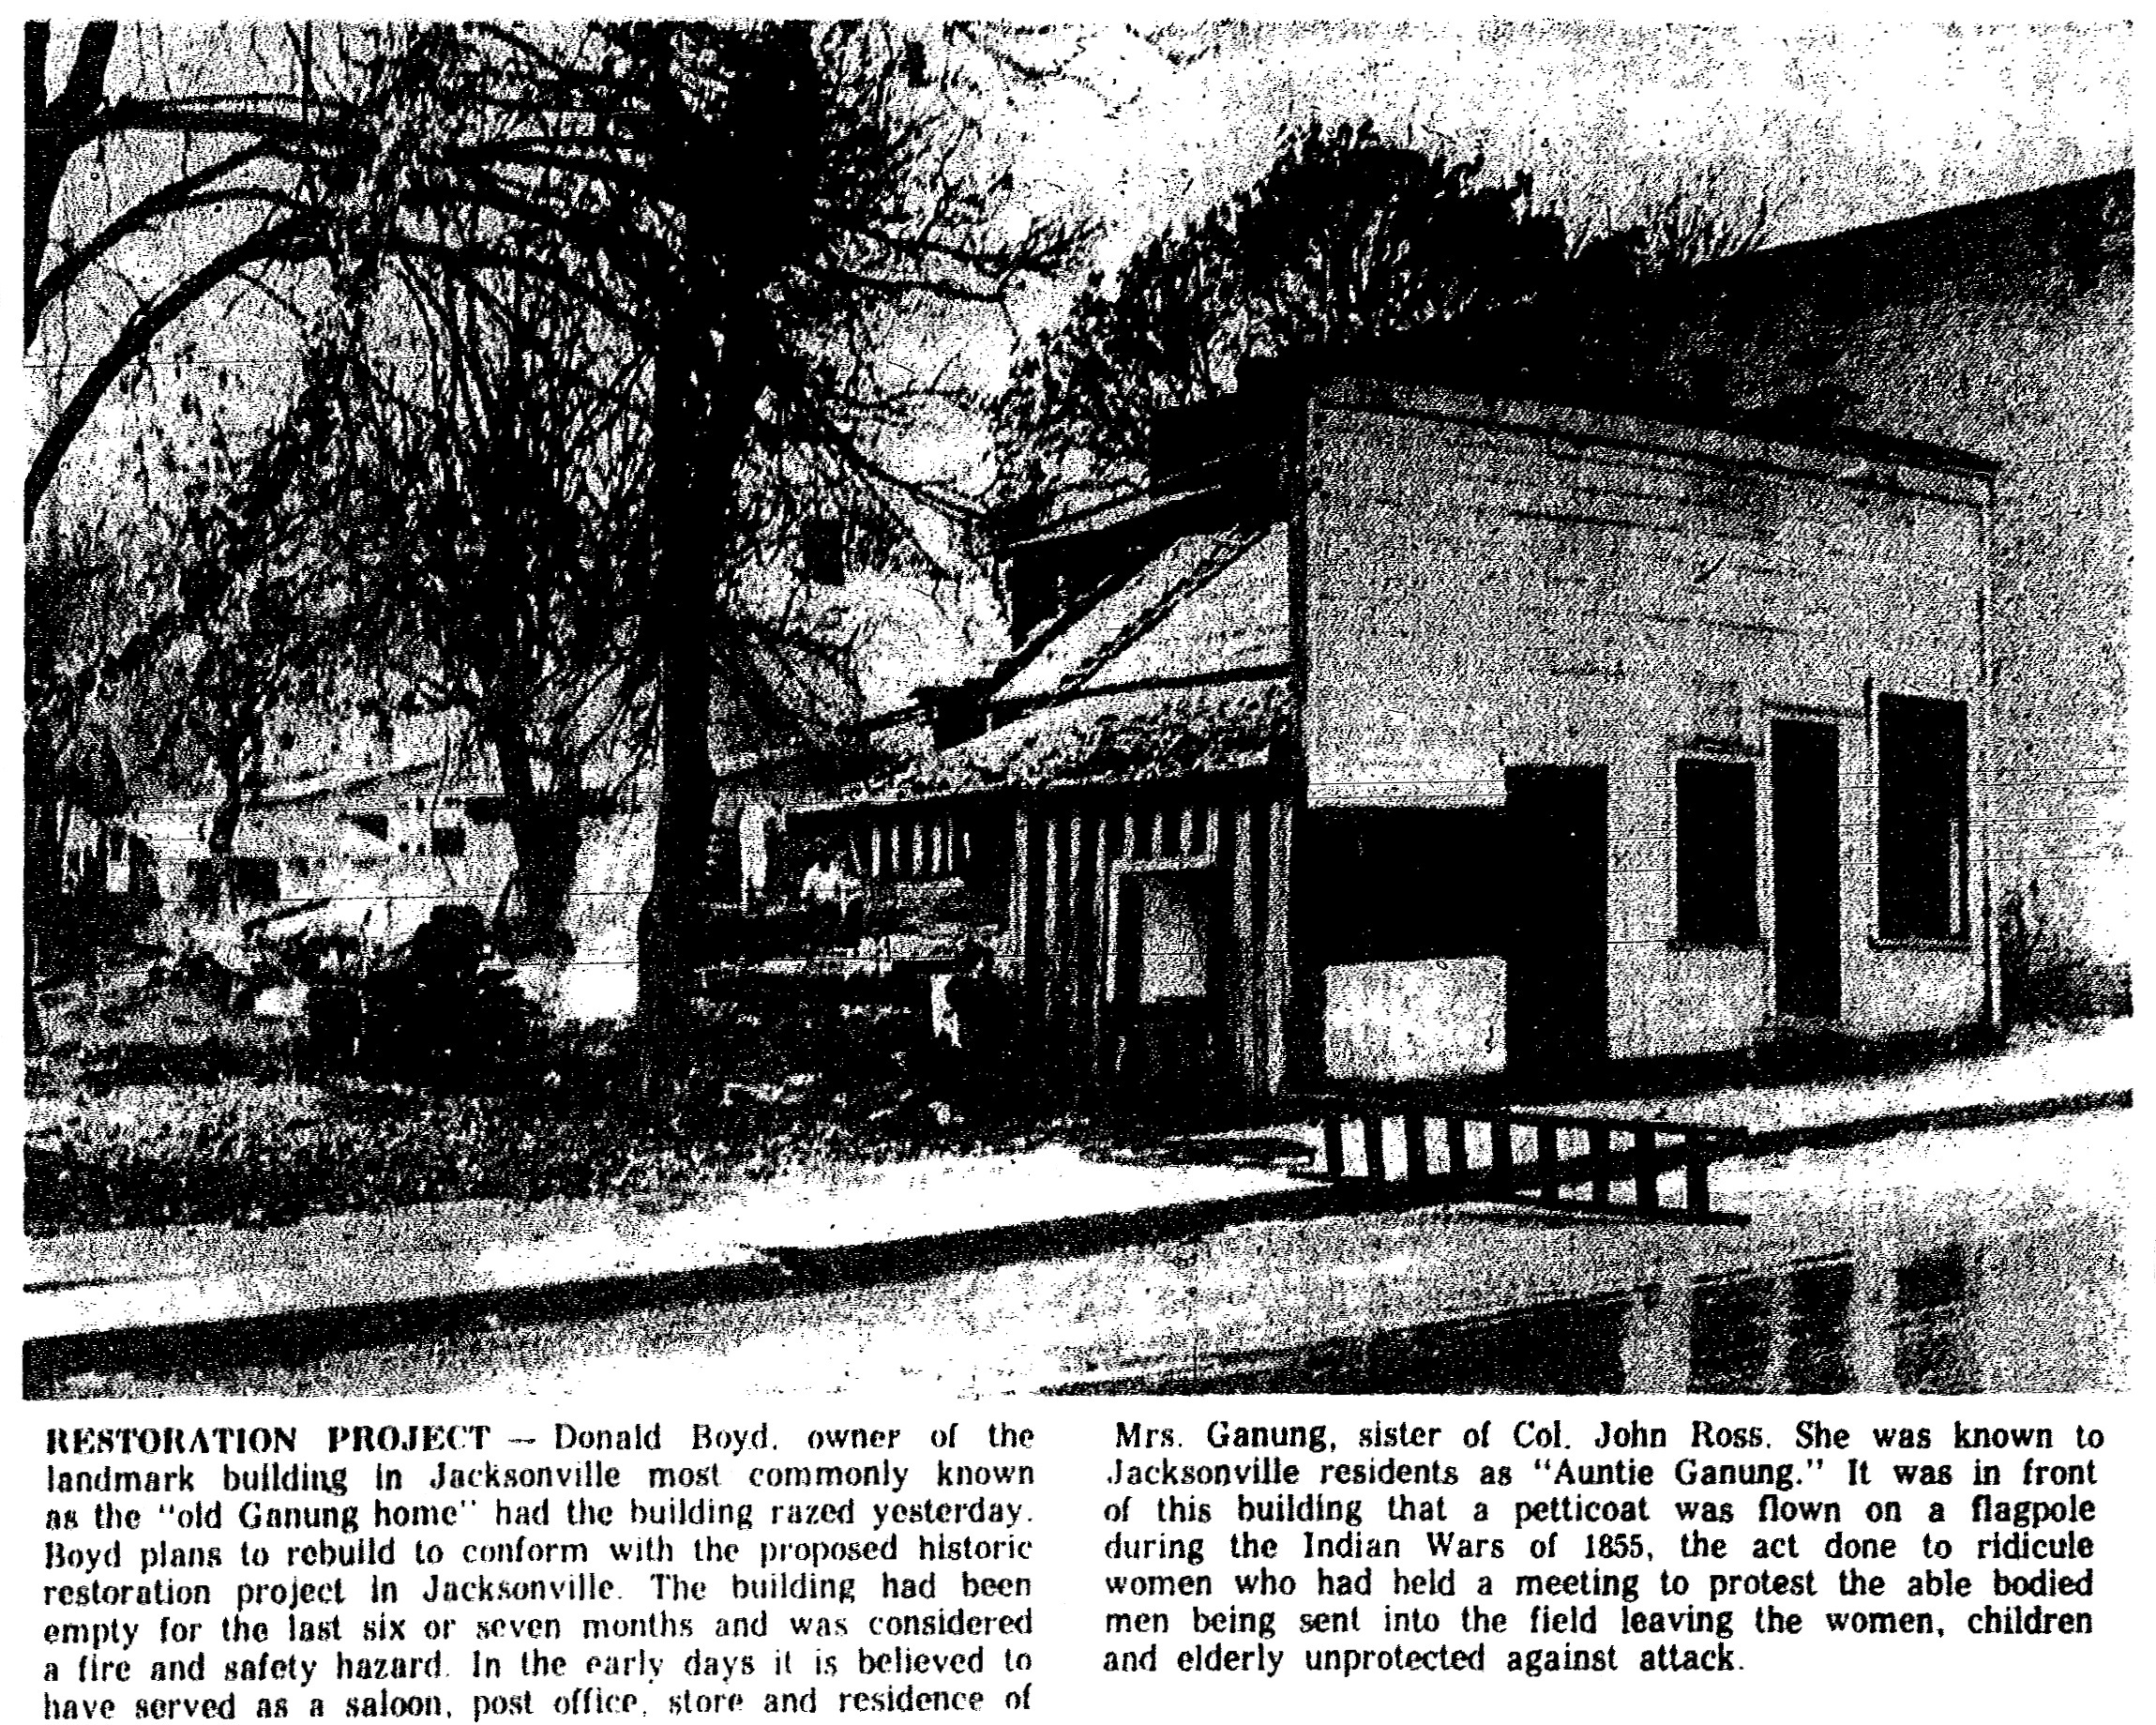 The Ganung House December 31, 1965 Medford Mail Tribune